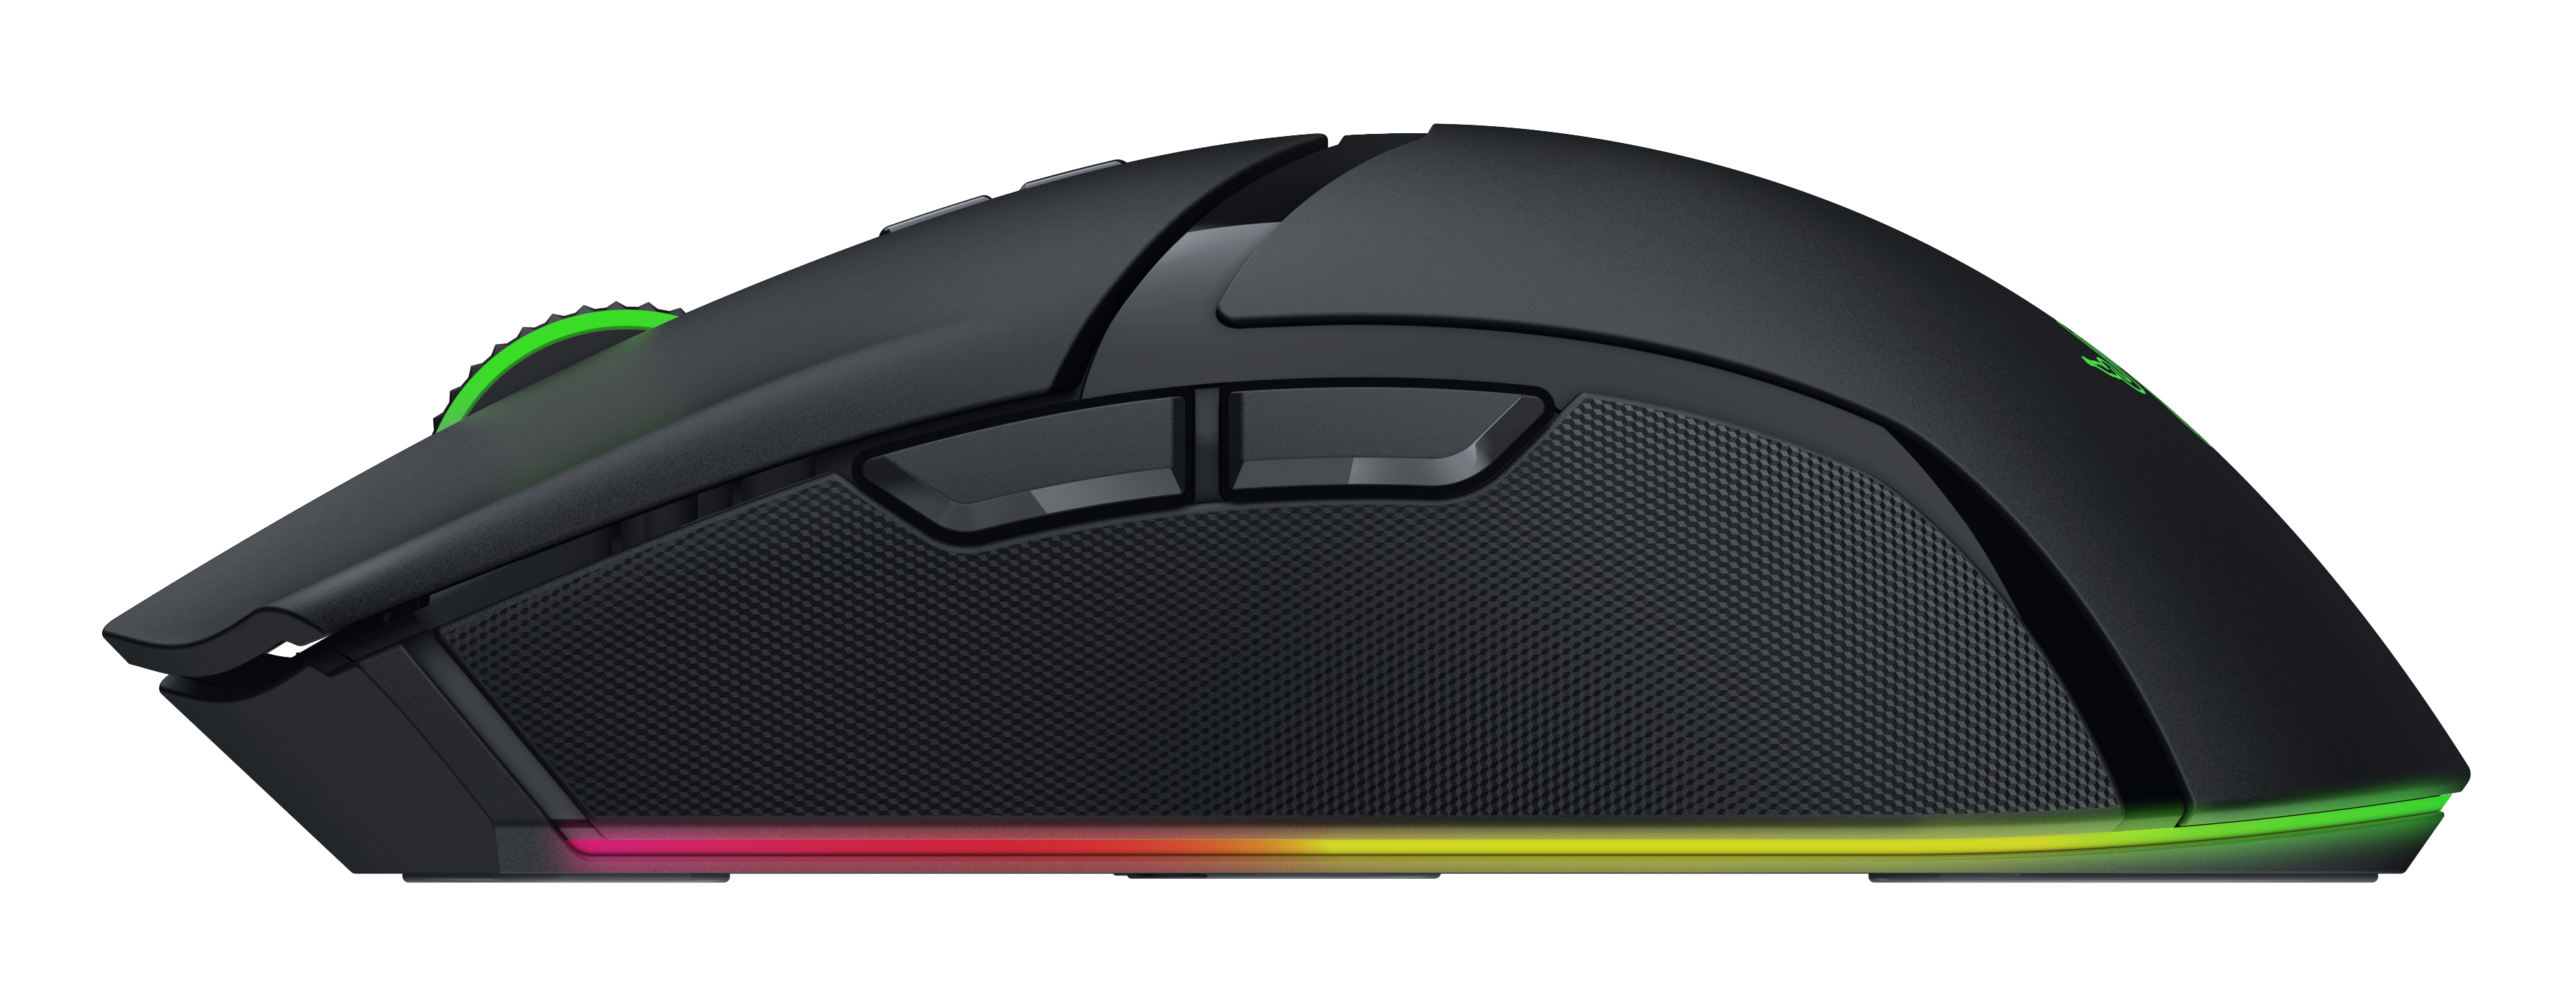 Razer Cobra Pro Lightweight Wireless Gaming Mouse with Razer Chroma RGB - Black